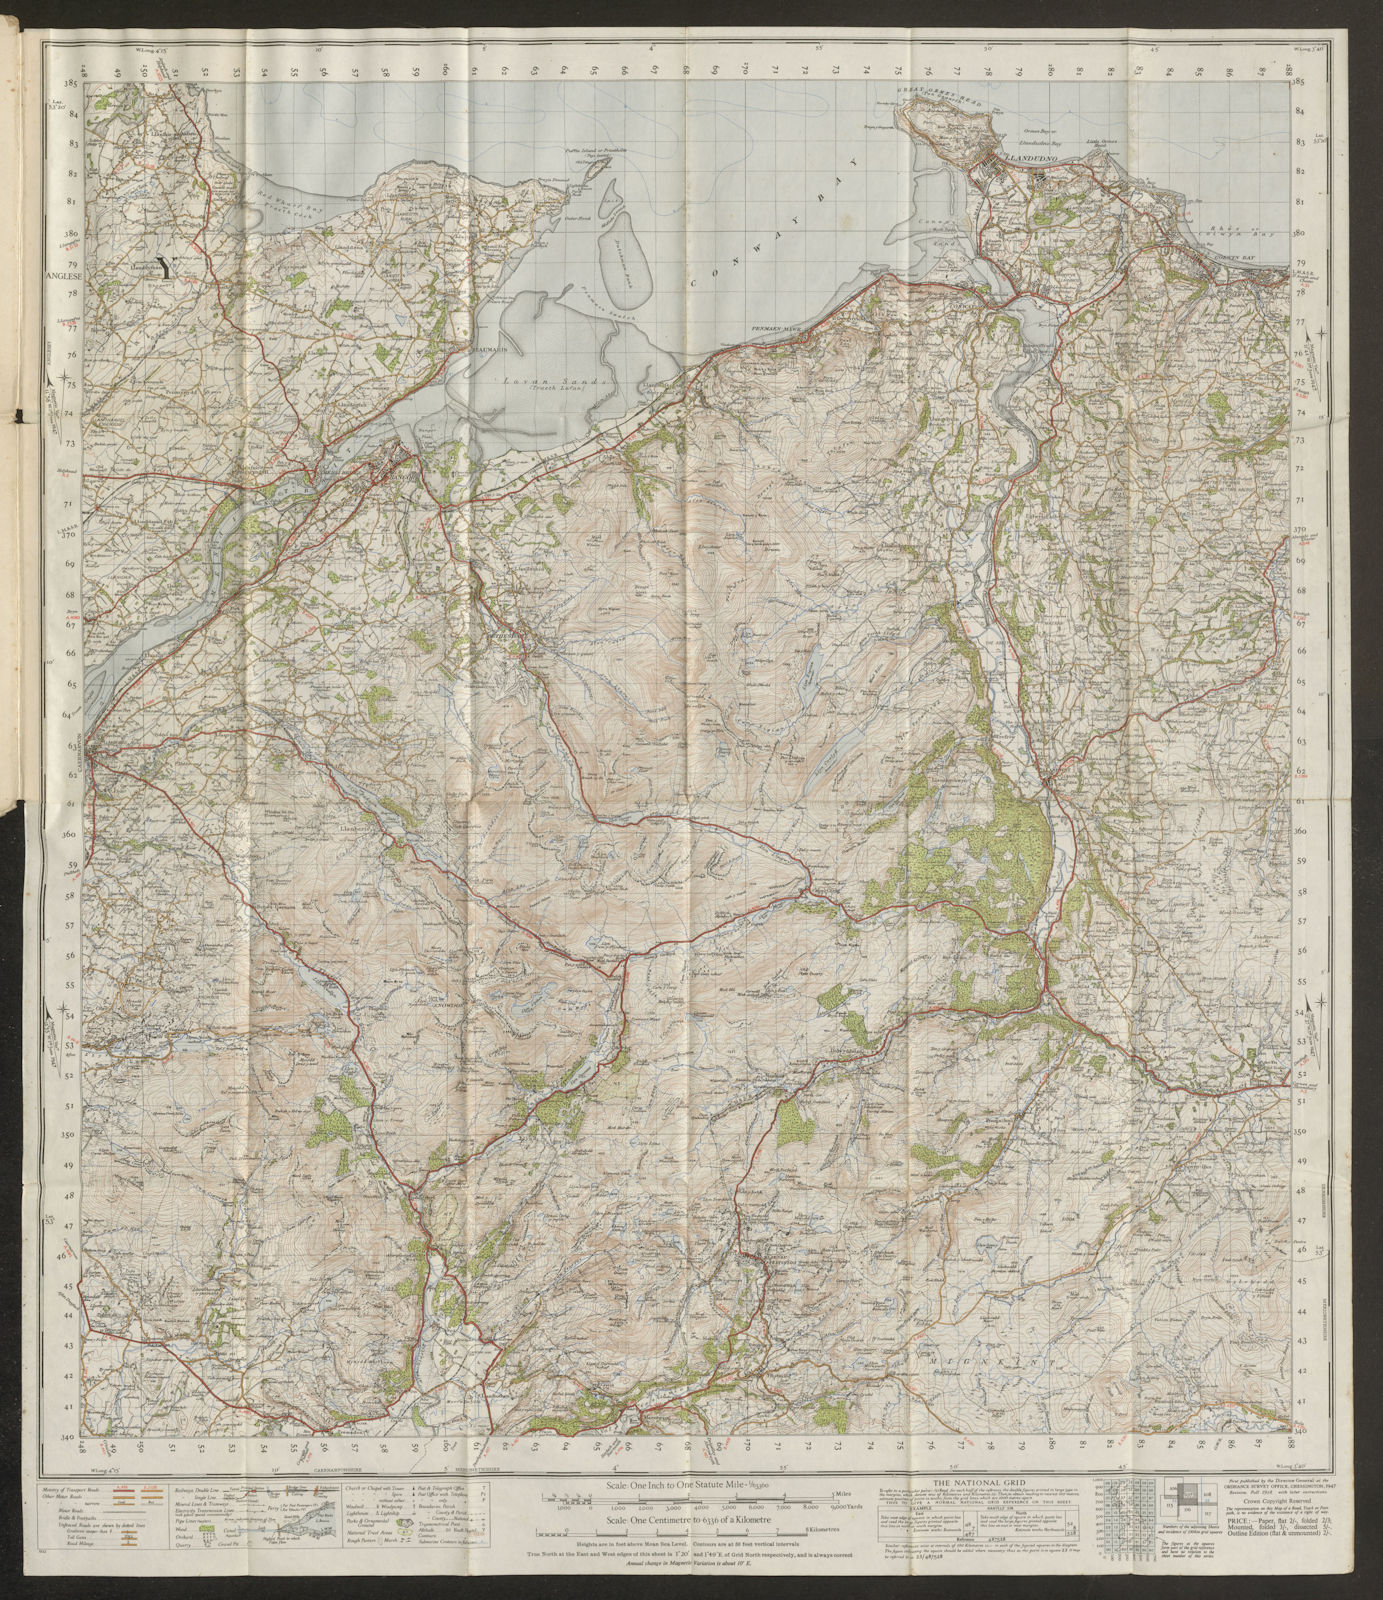 Snowdon Sheet 107 Menai Str. Bangor Llandudno Snowdonia ORDNANCE SURVEY 1947 map